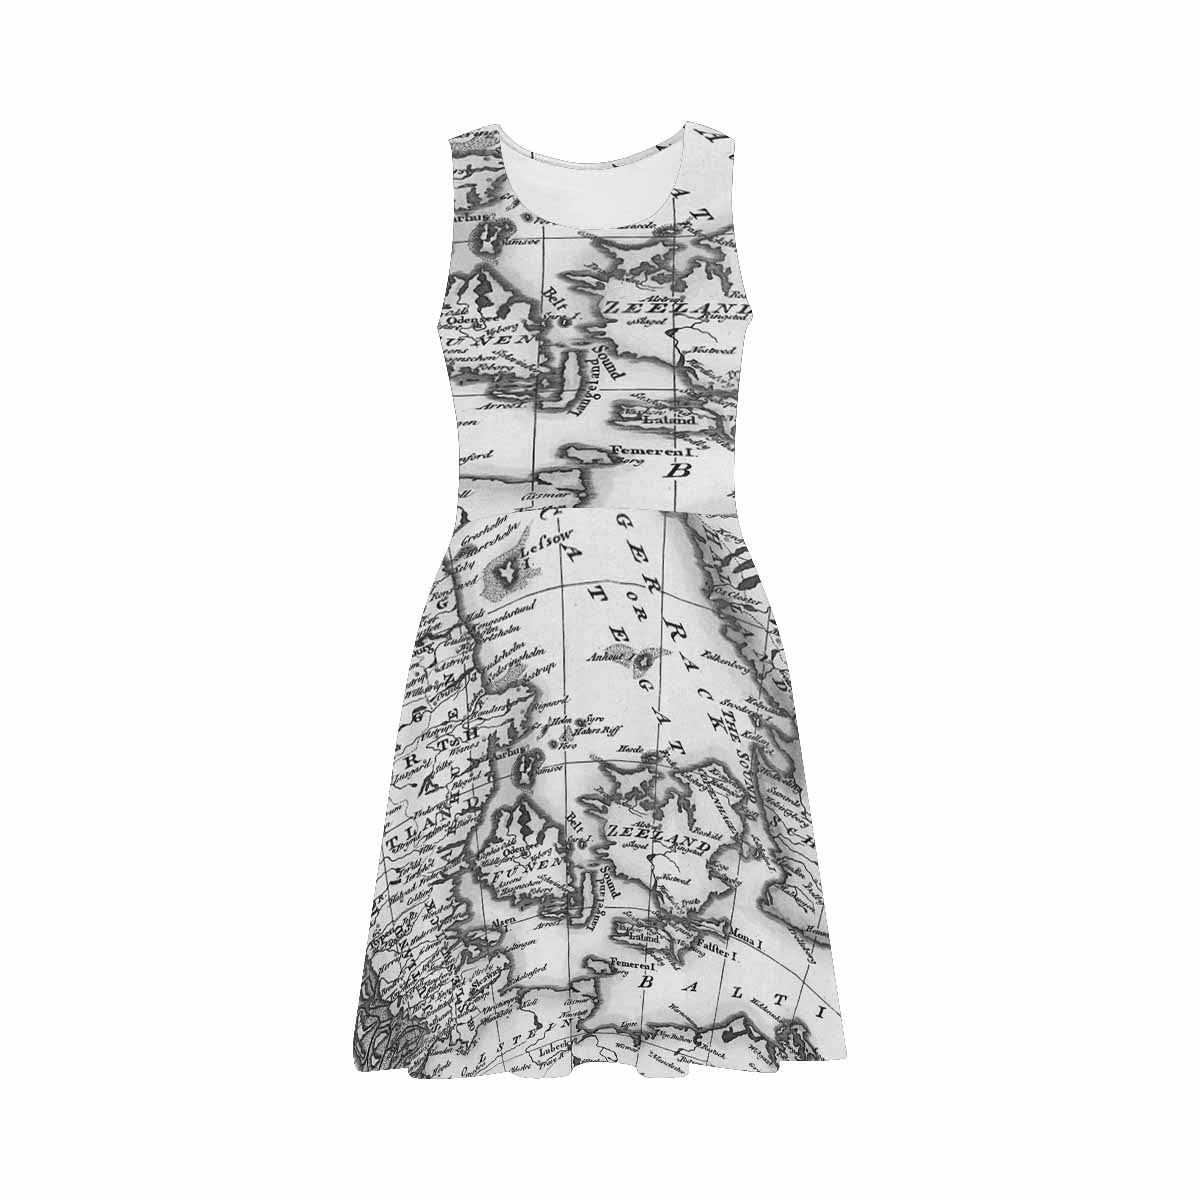 Antique Map casual summer dress, MODEL 09534, design 26